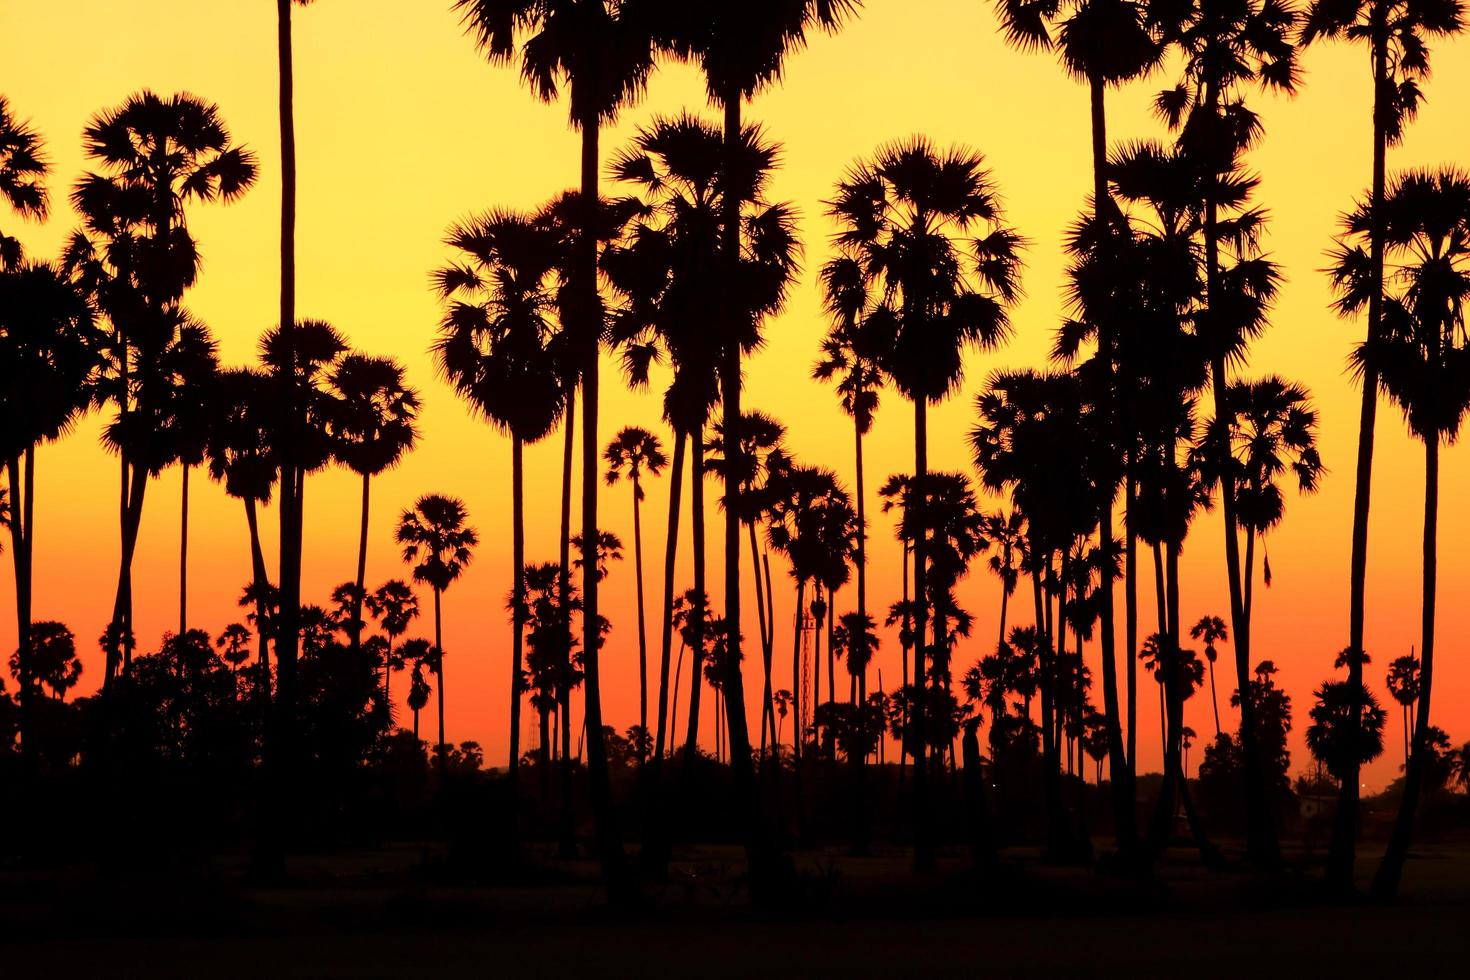 silhouet palmbomen bij zonsondergang foto